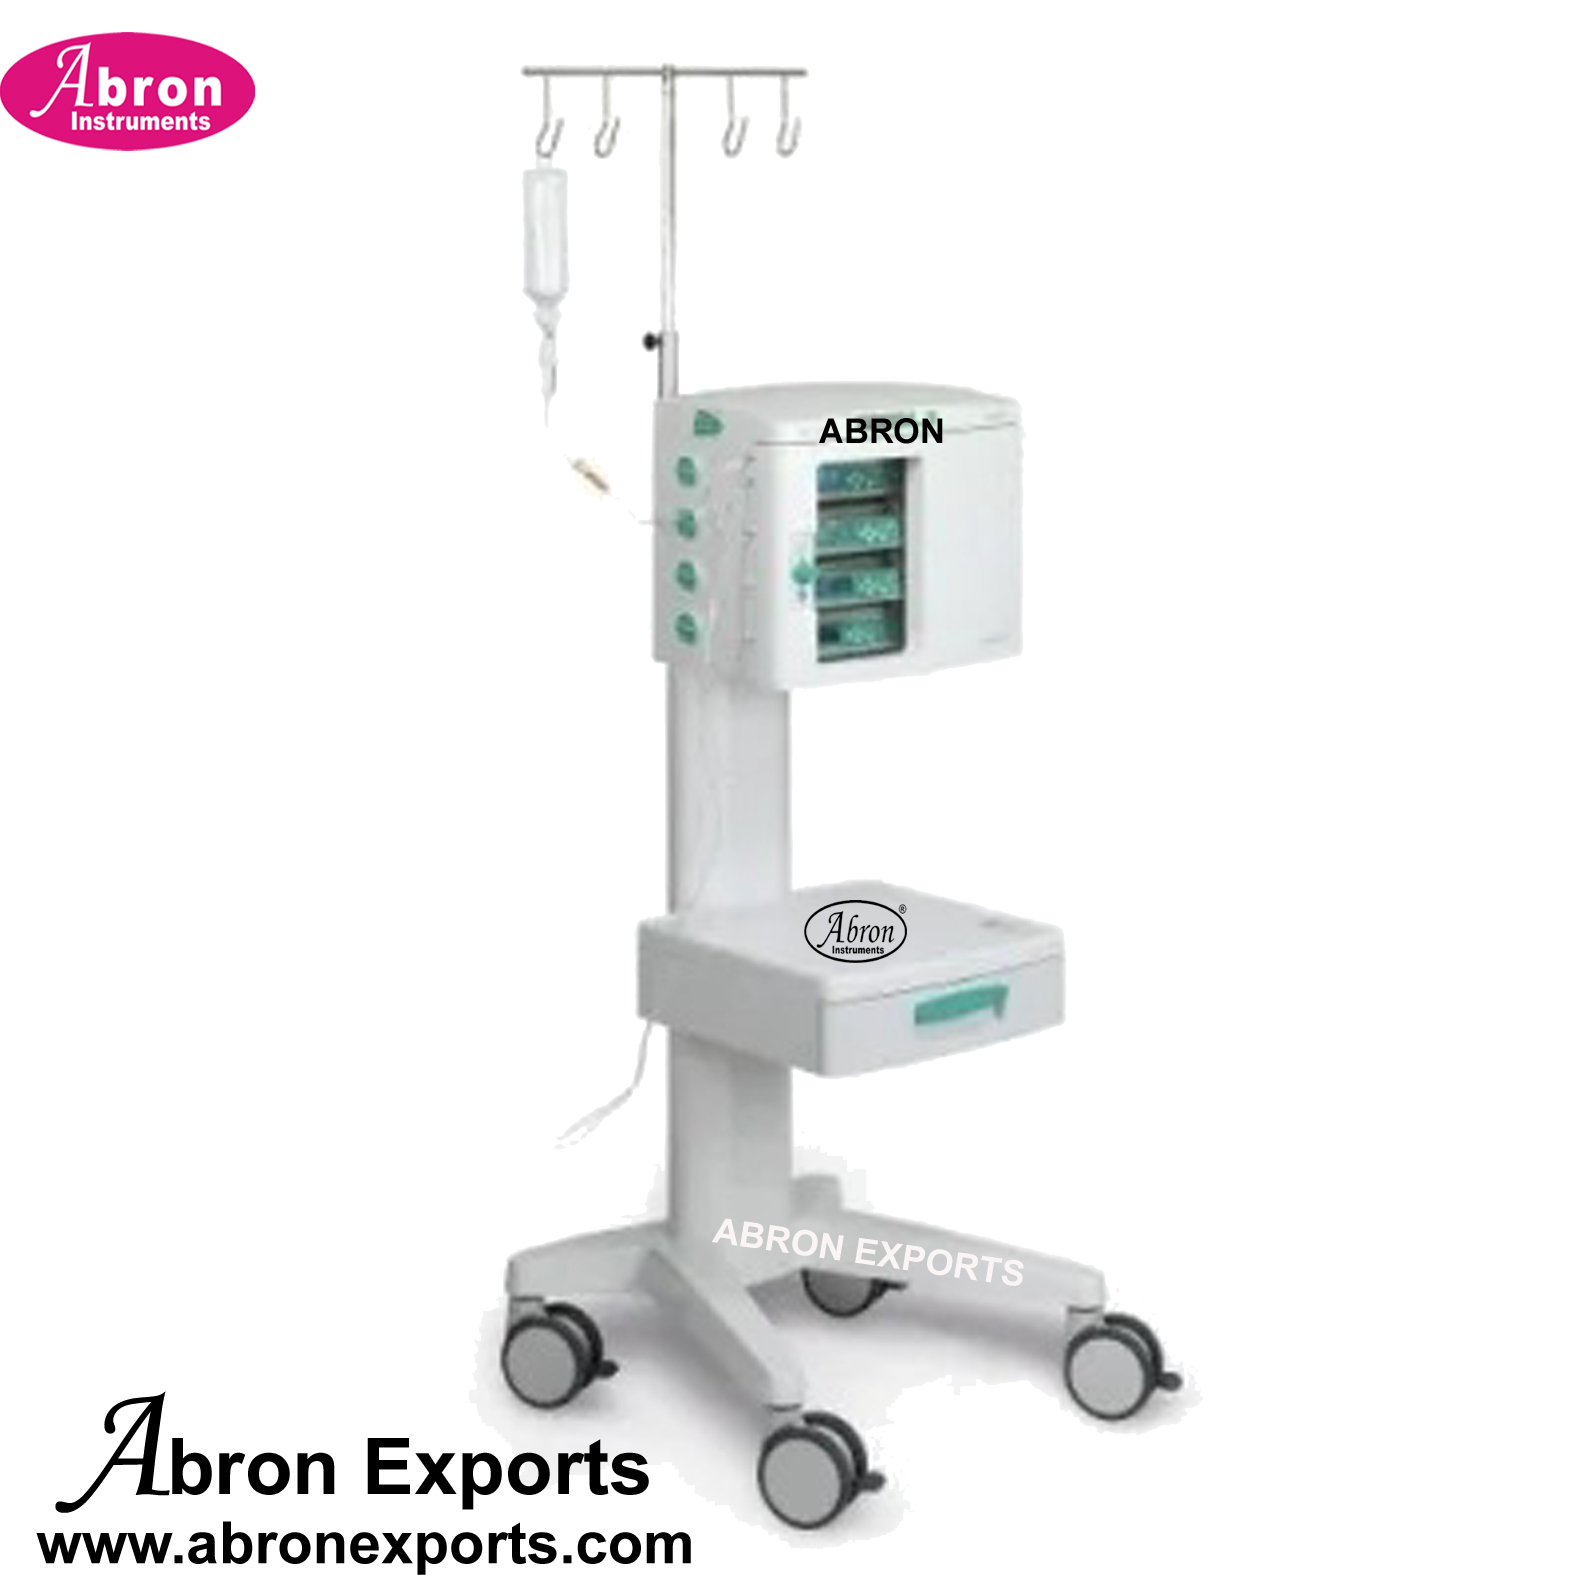  MRI compatible syringe pump without stand MRI Hospital Nursing Home Medical Abron ABM-2291SP